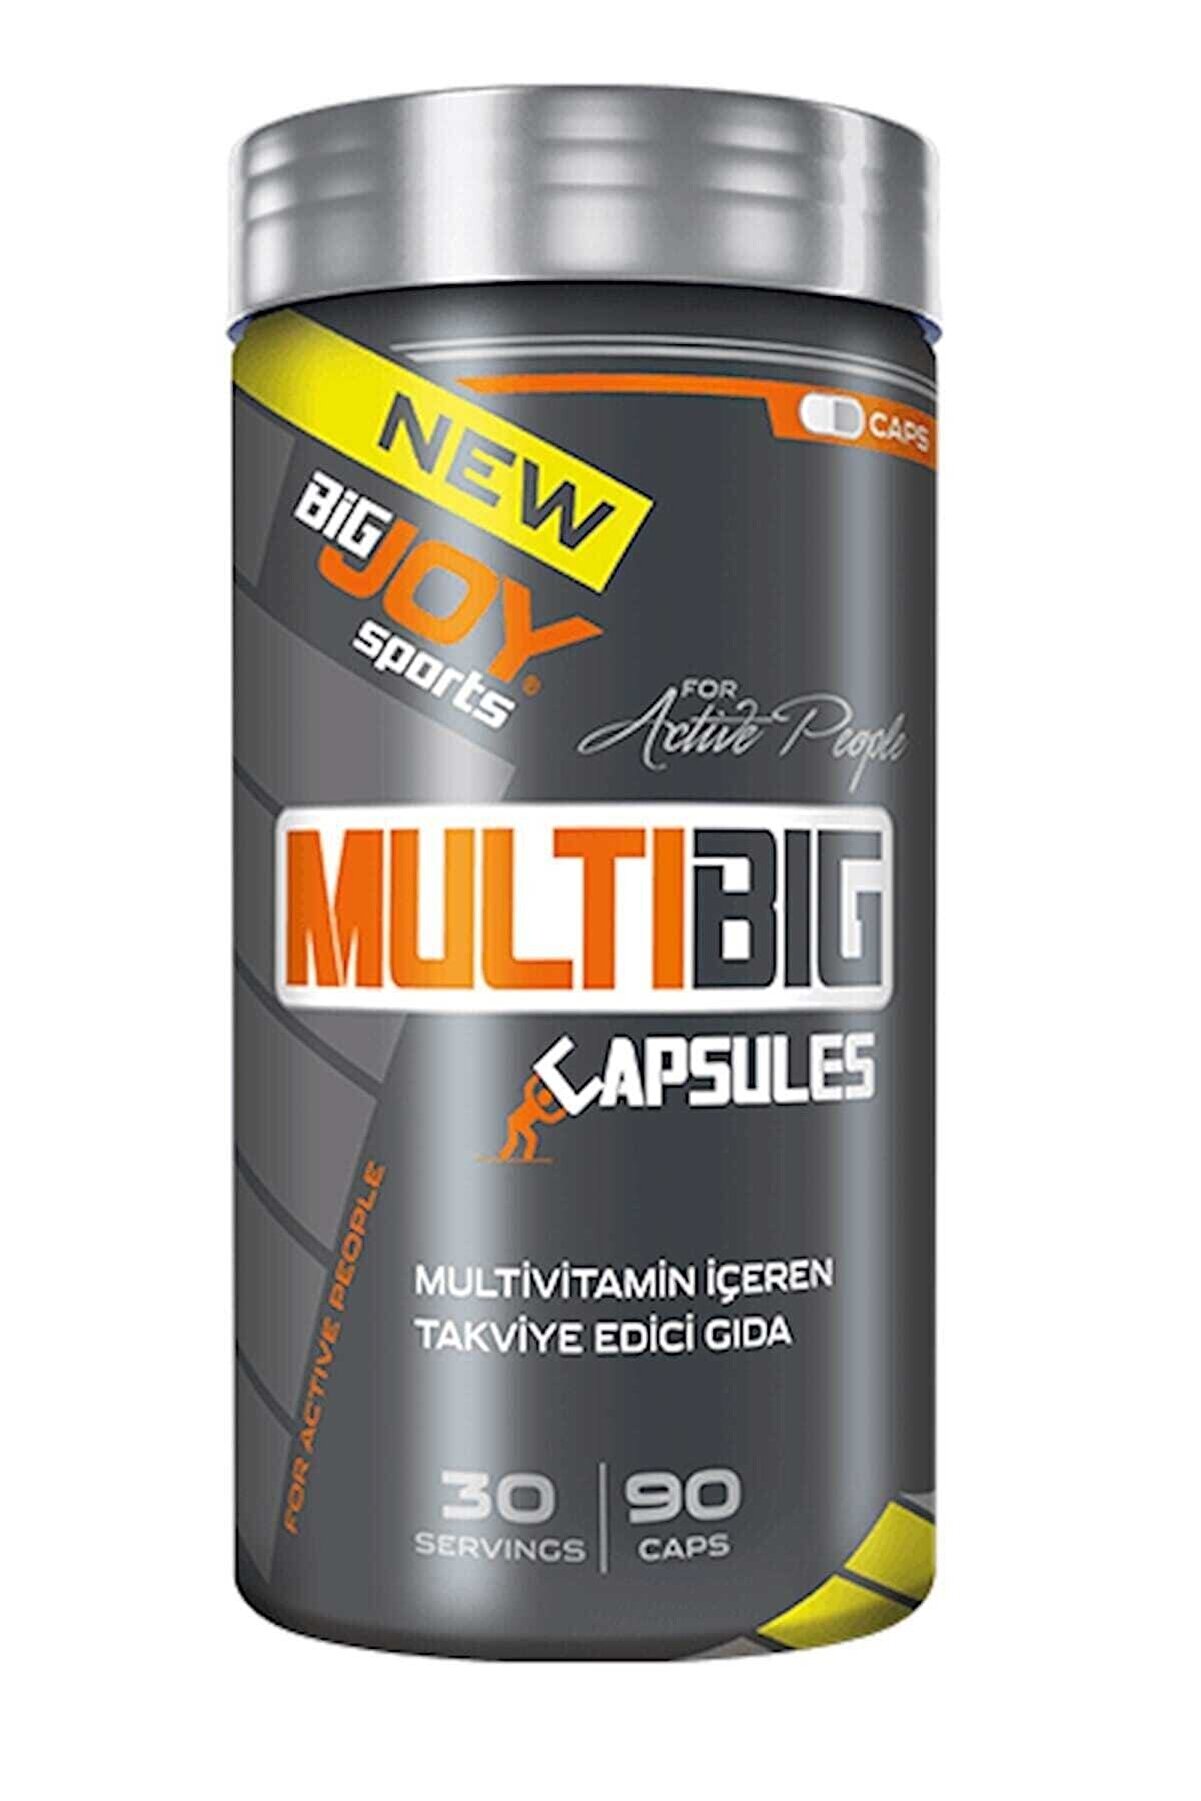 Bigjoy Sports Multibig Multivitamin 90 Kapsül Vitamin&mineral